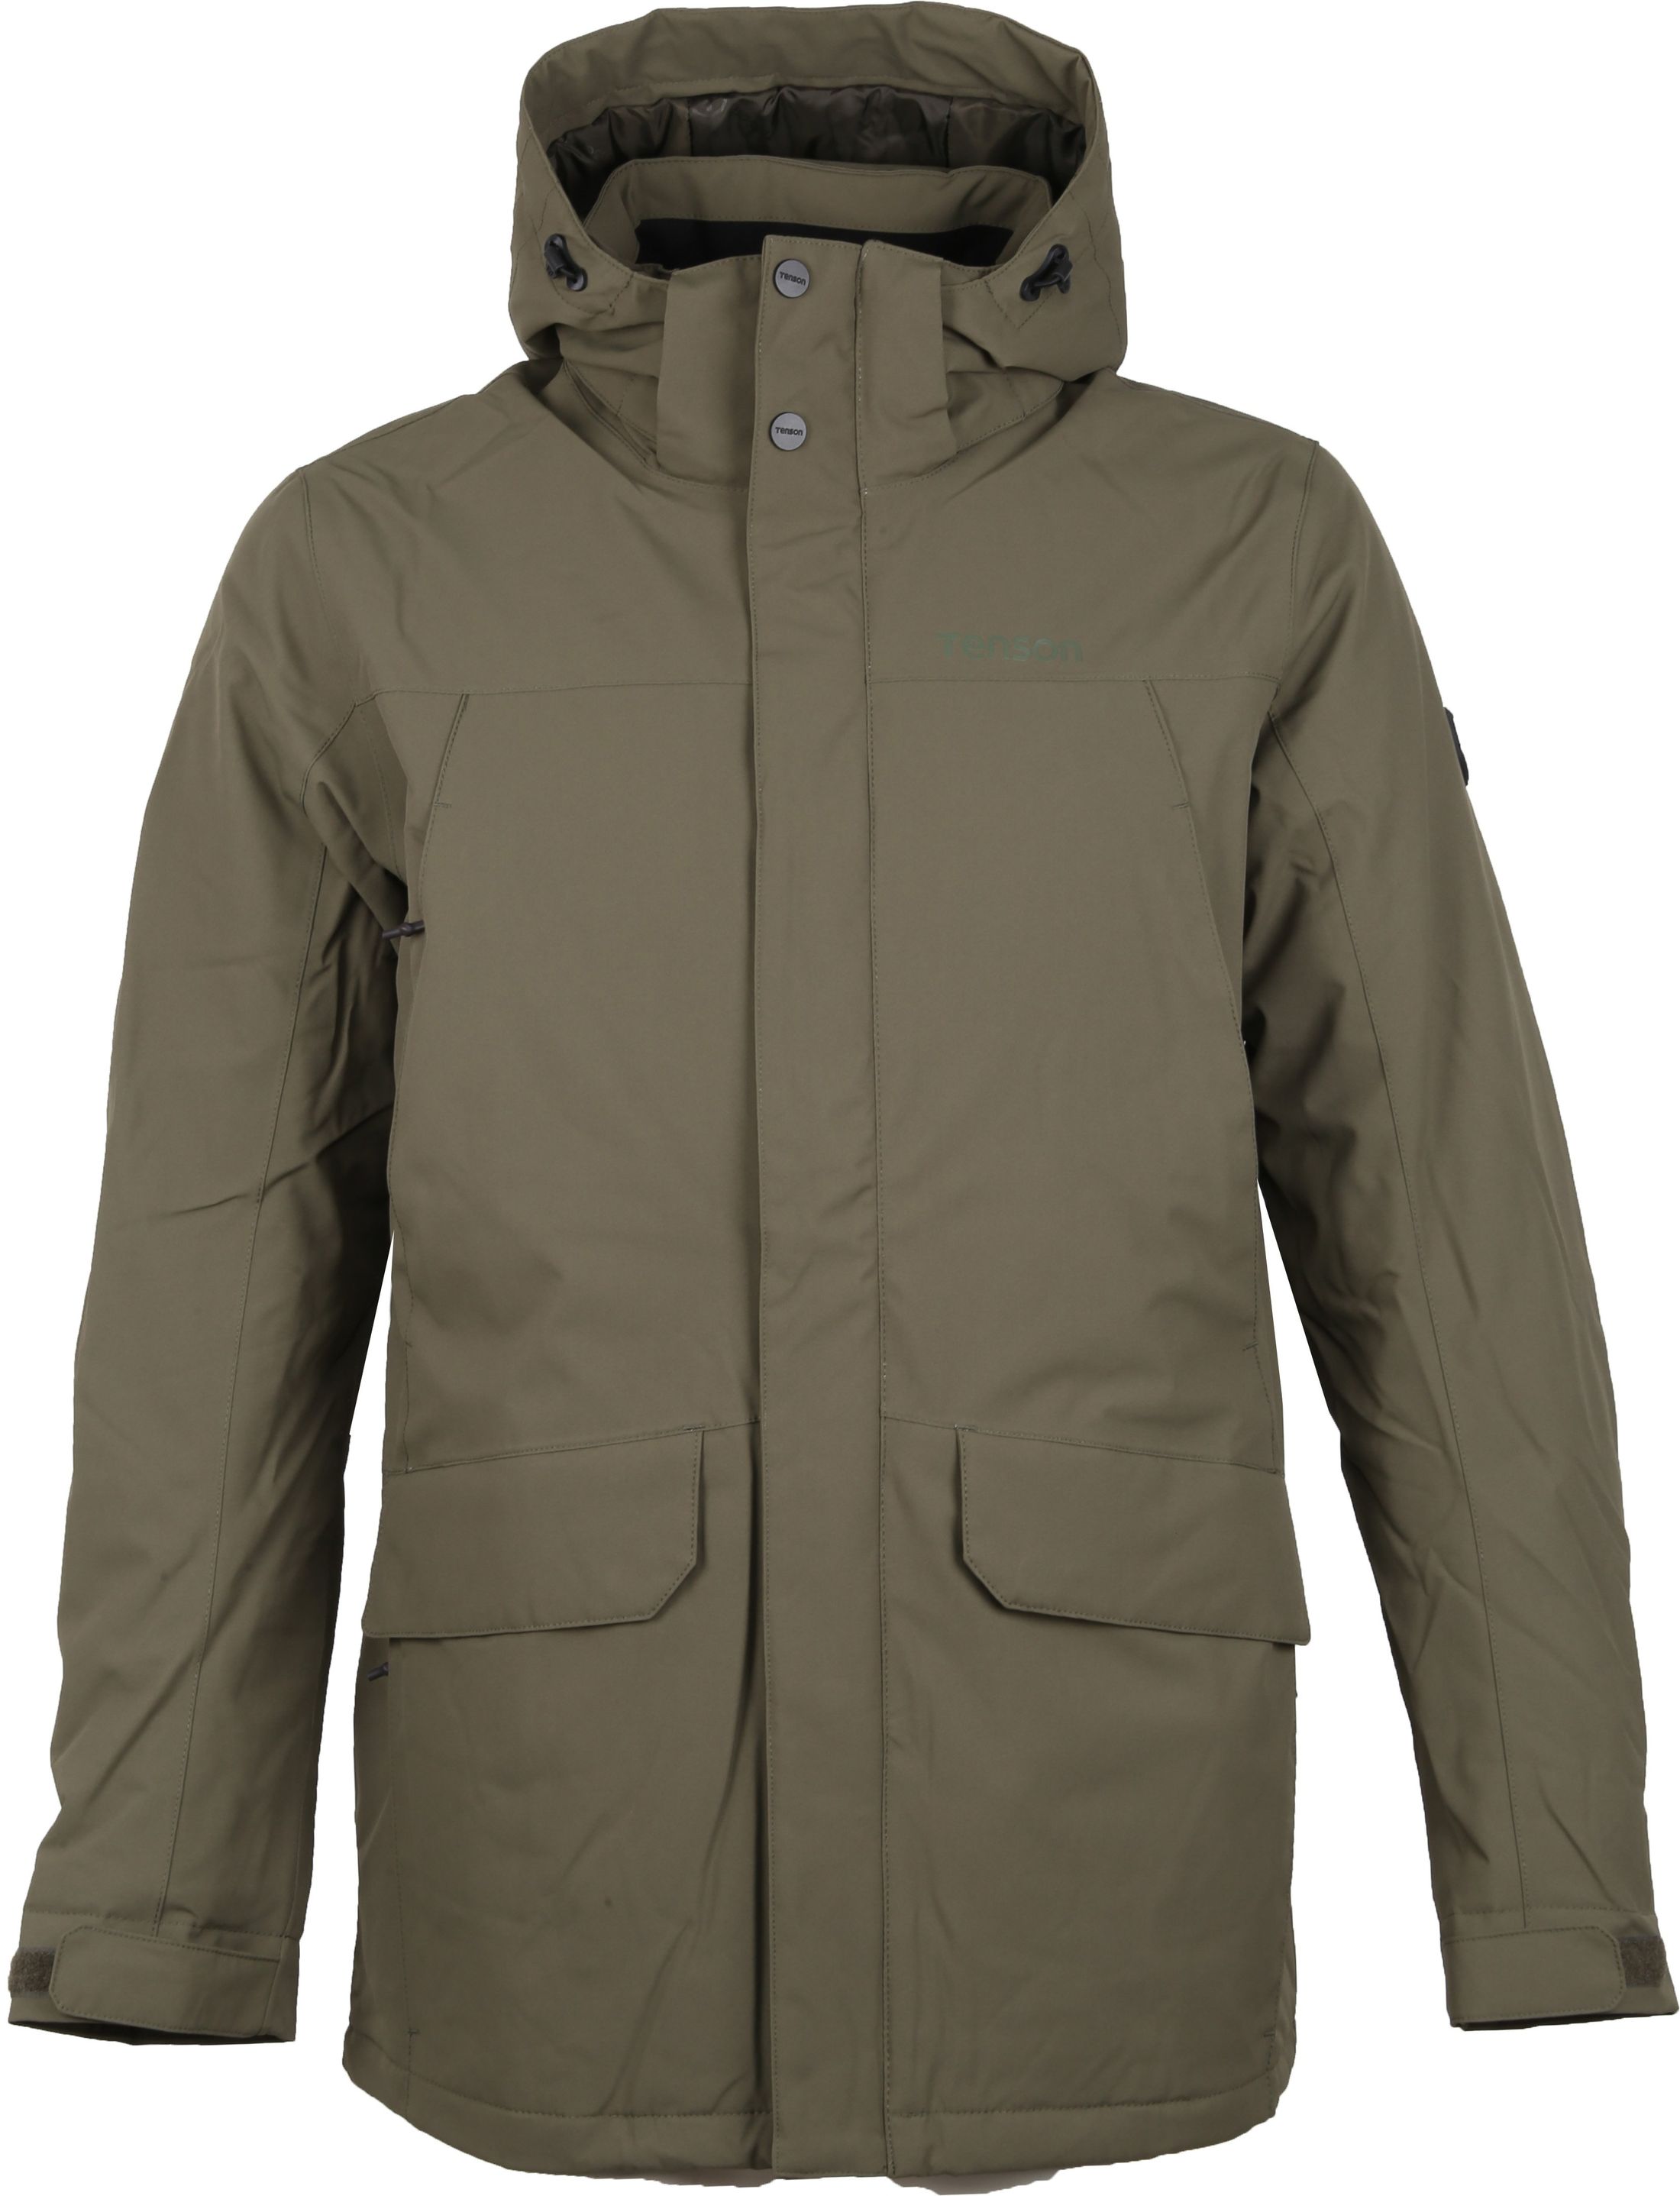 Tenson Jacket Harris Olive Khaki Green size M